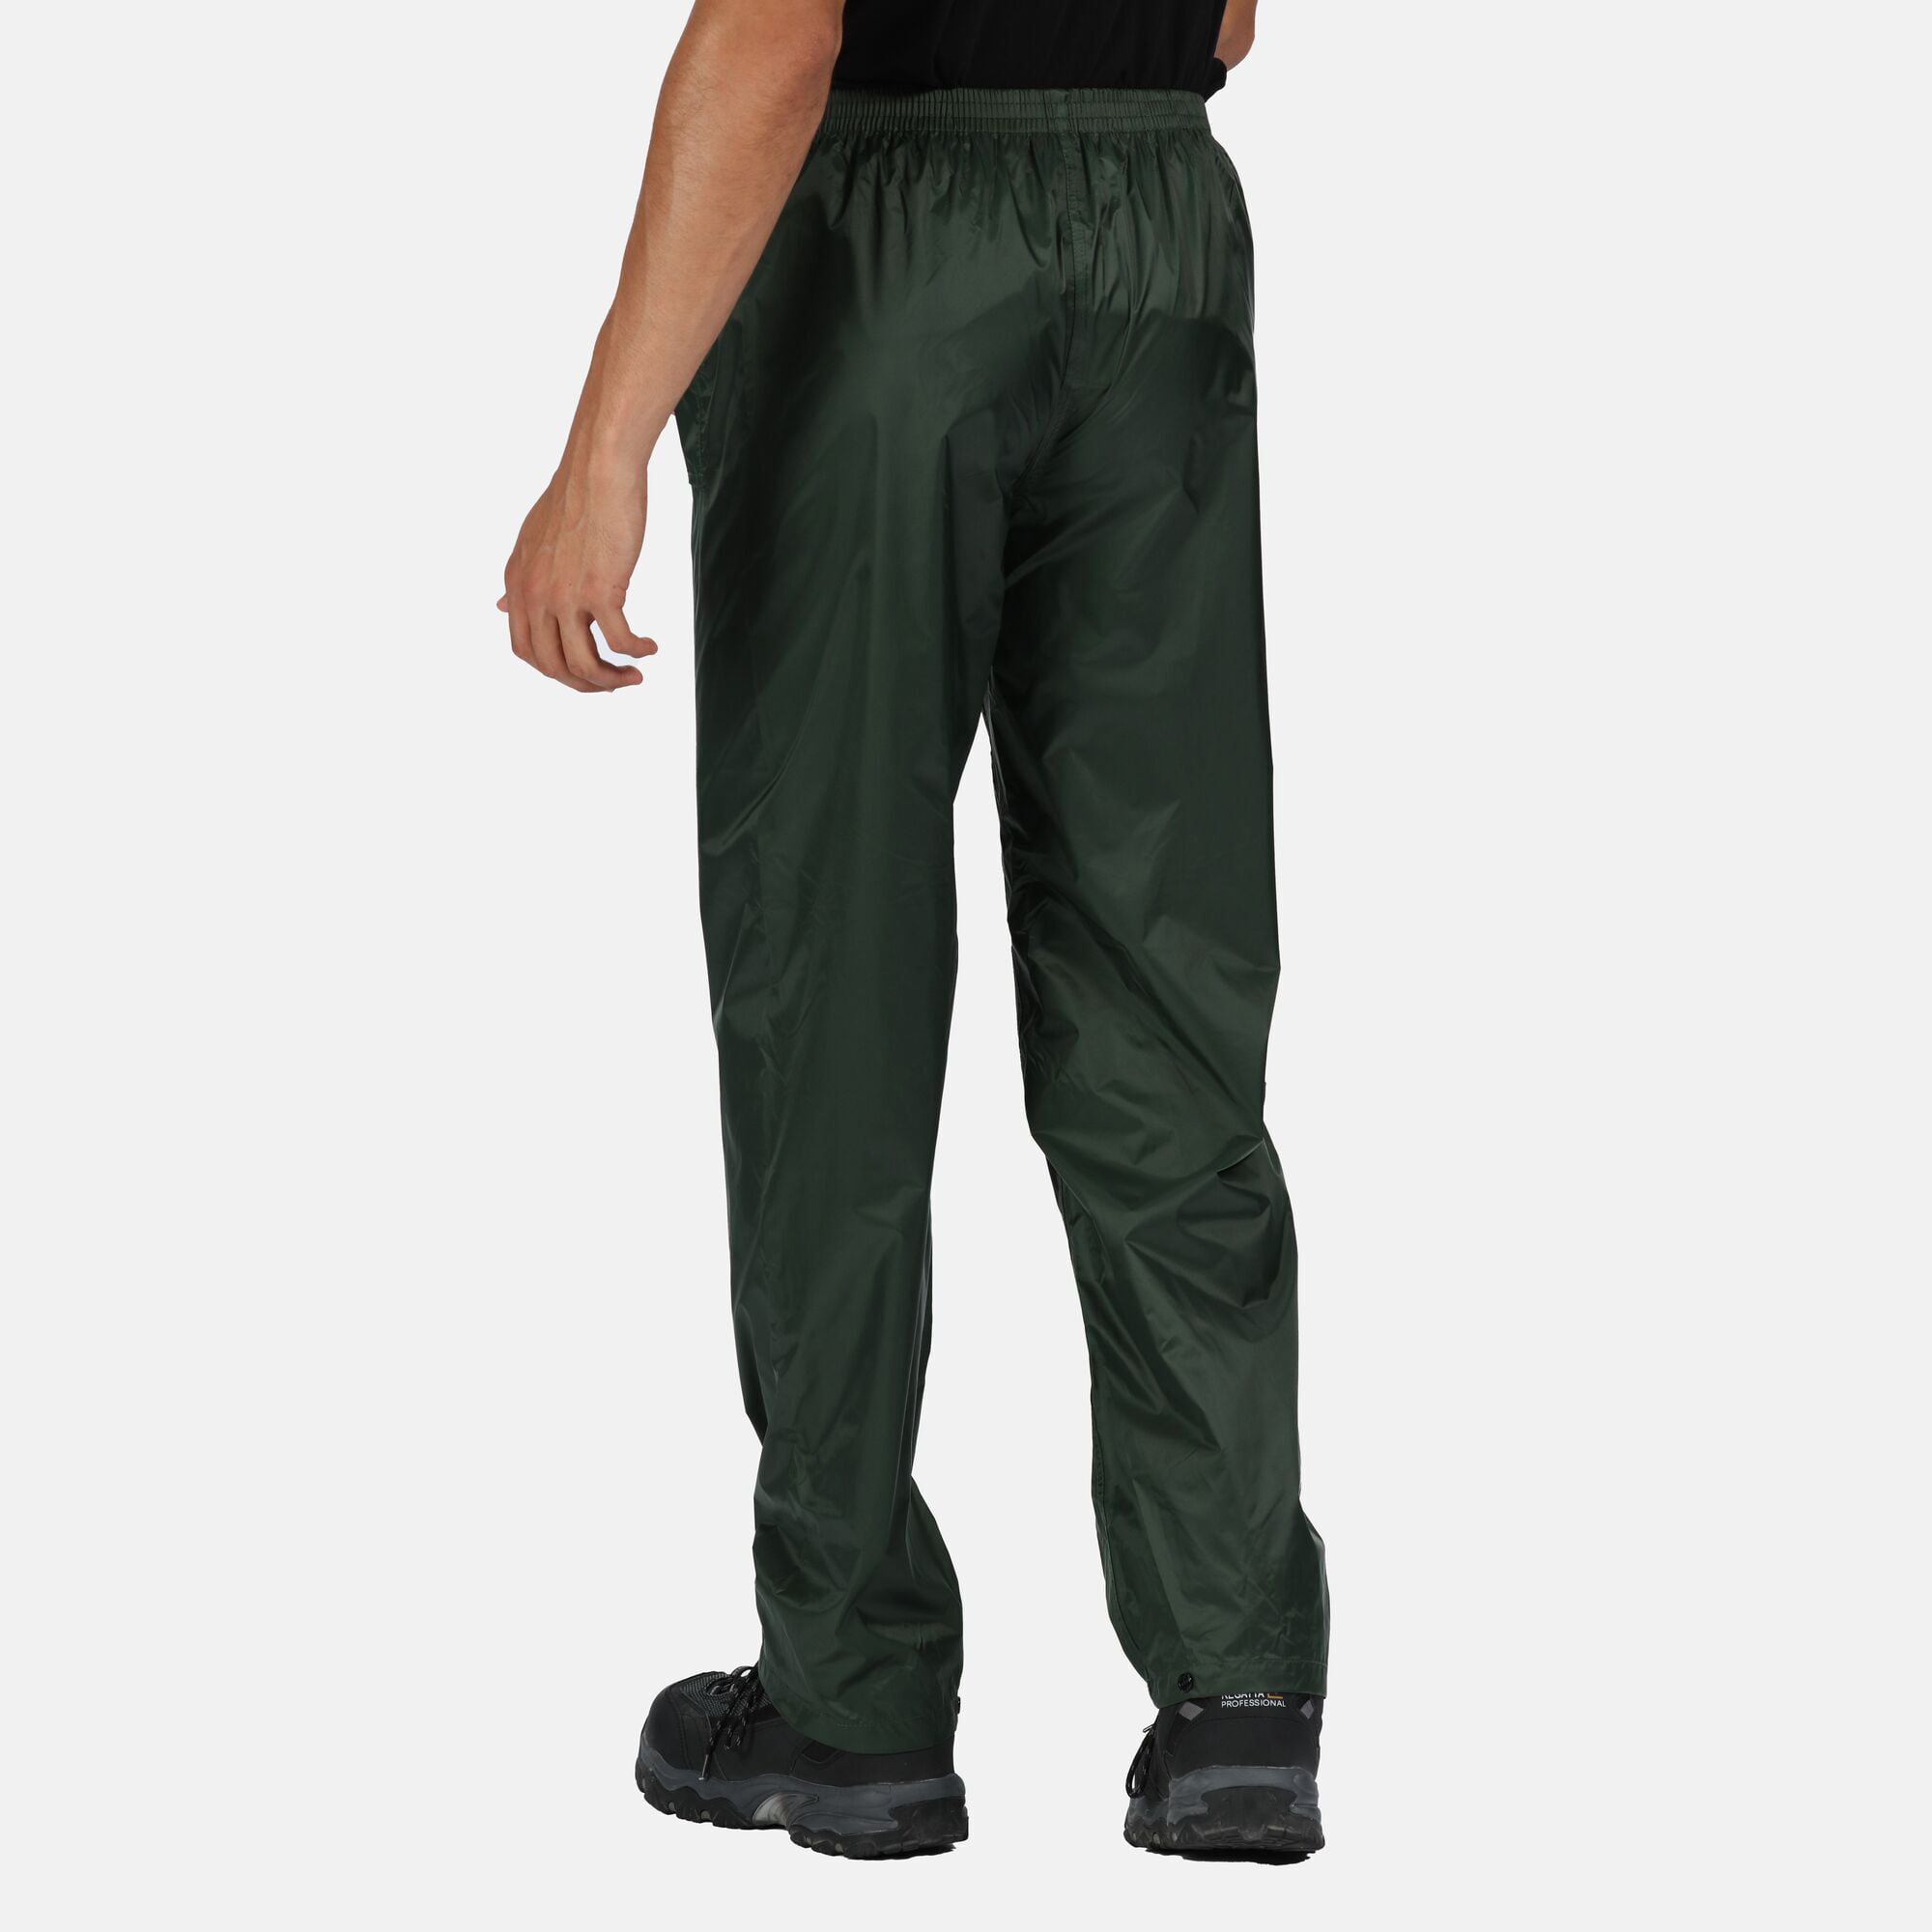 Regatta Professional Pro Packaway Overtrousers TRW348 Men's Waterproof Pants 